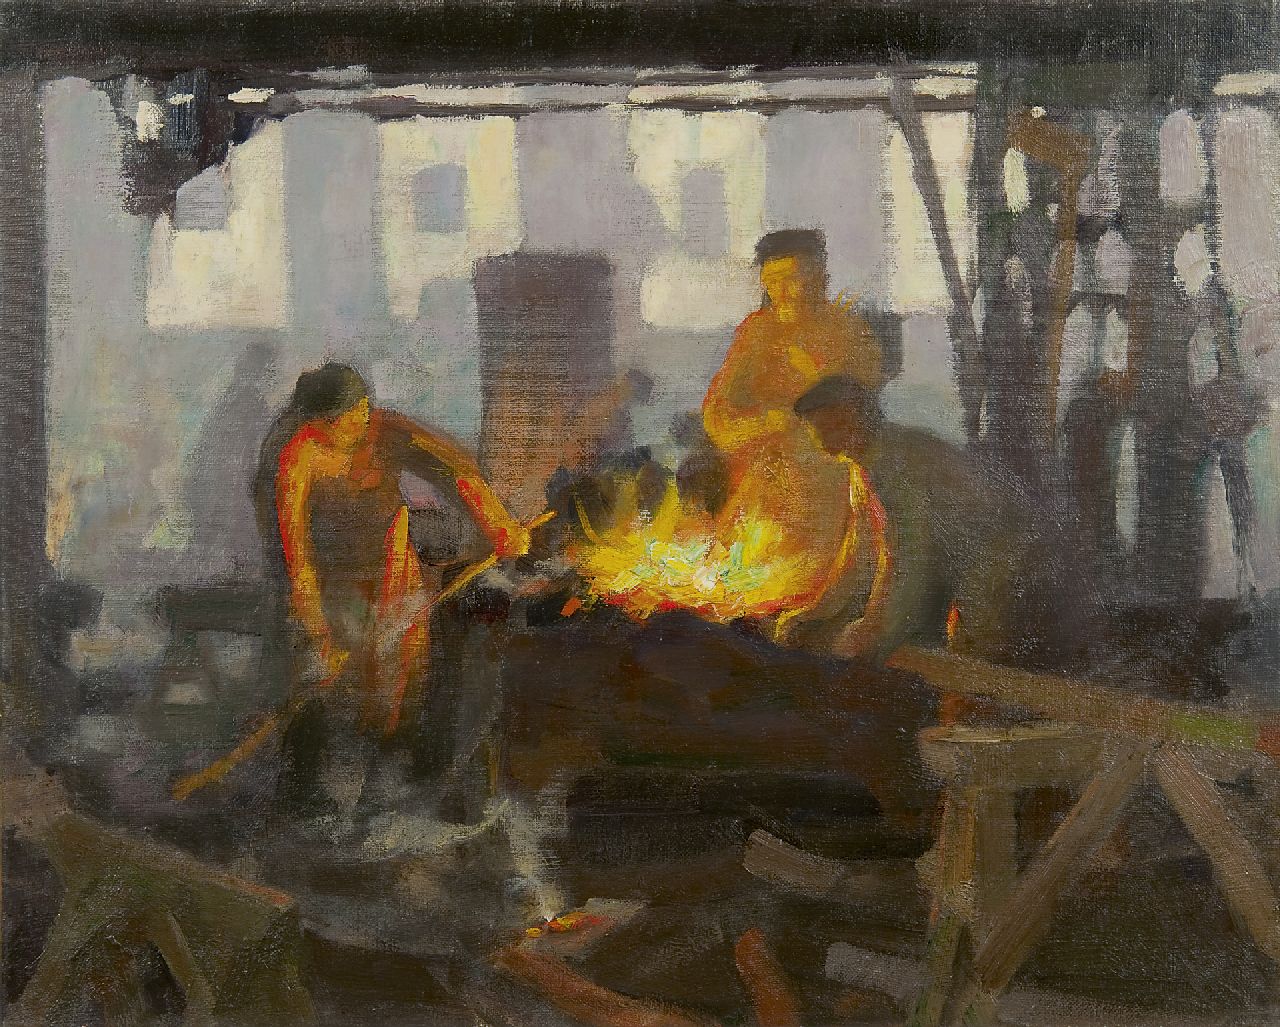 Louis Heijmans | The iron foundry Boddaert in Middelburg, oil on canvas, 40.2 x 50.2 cm